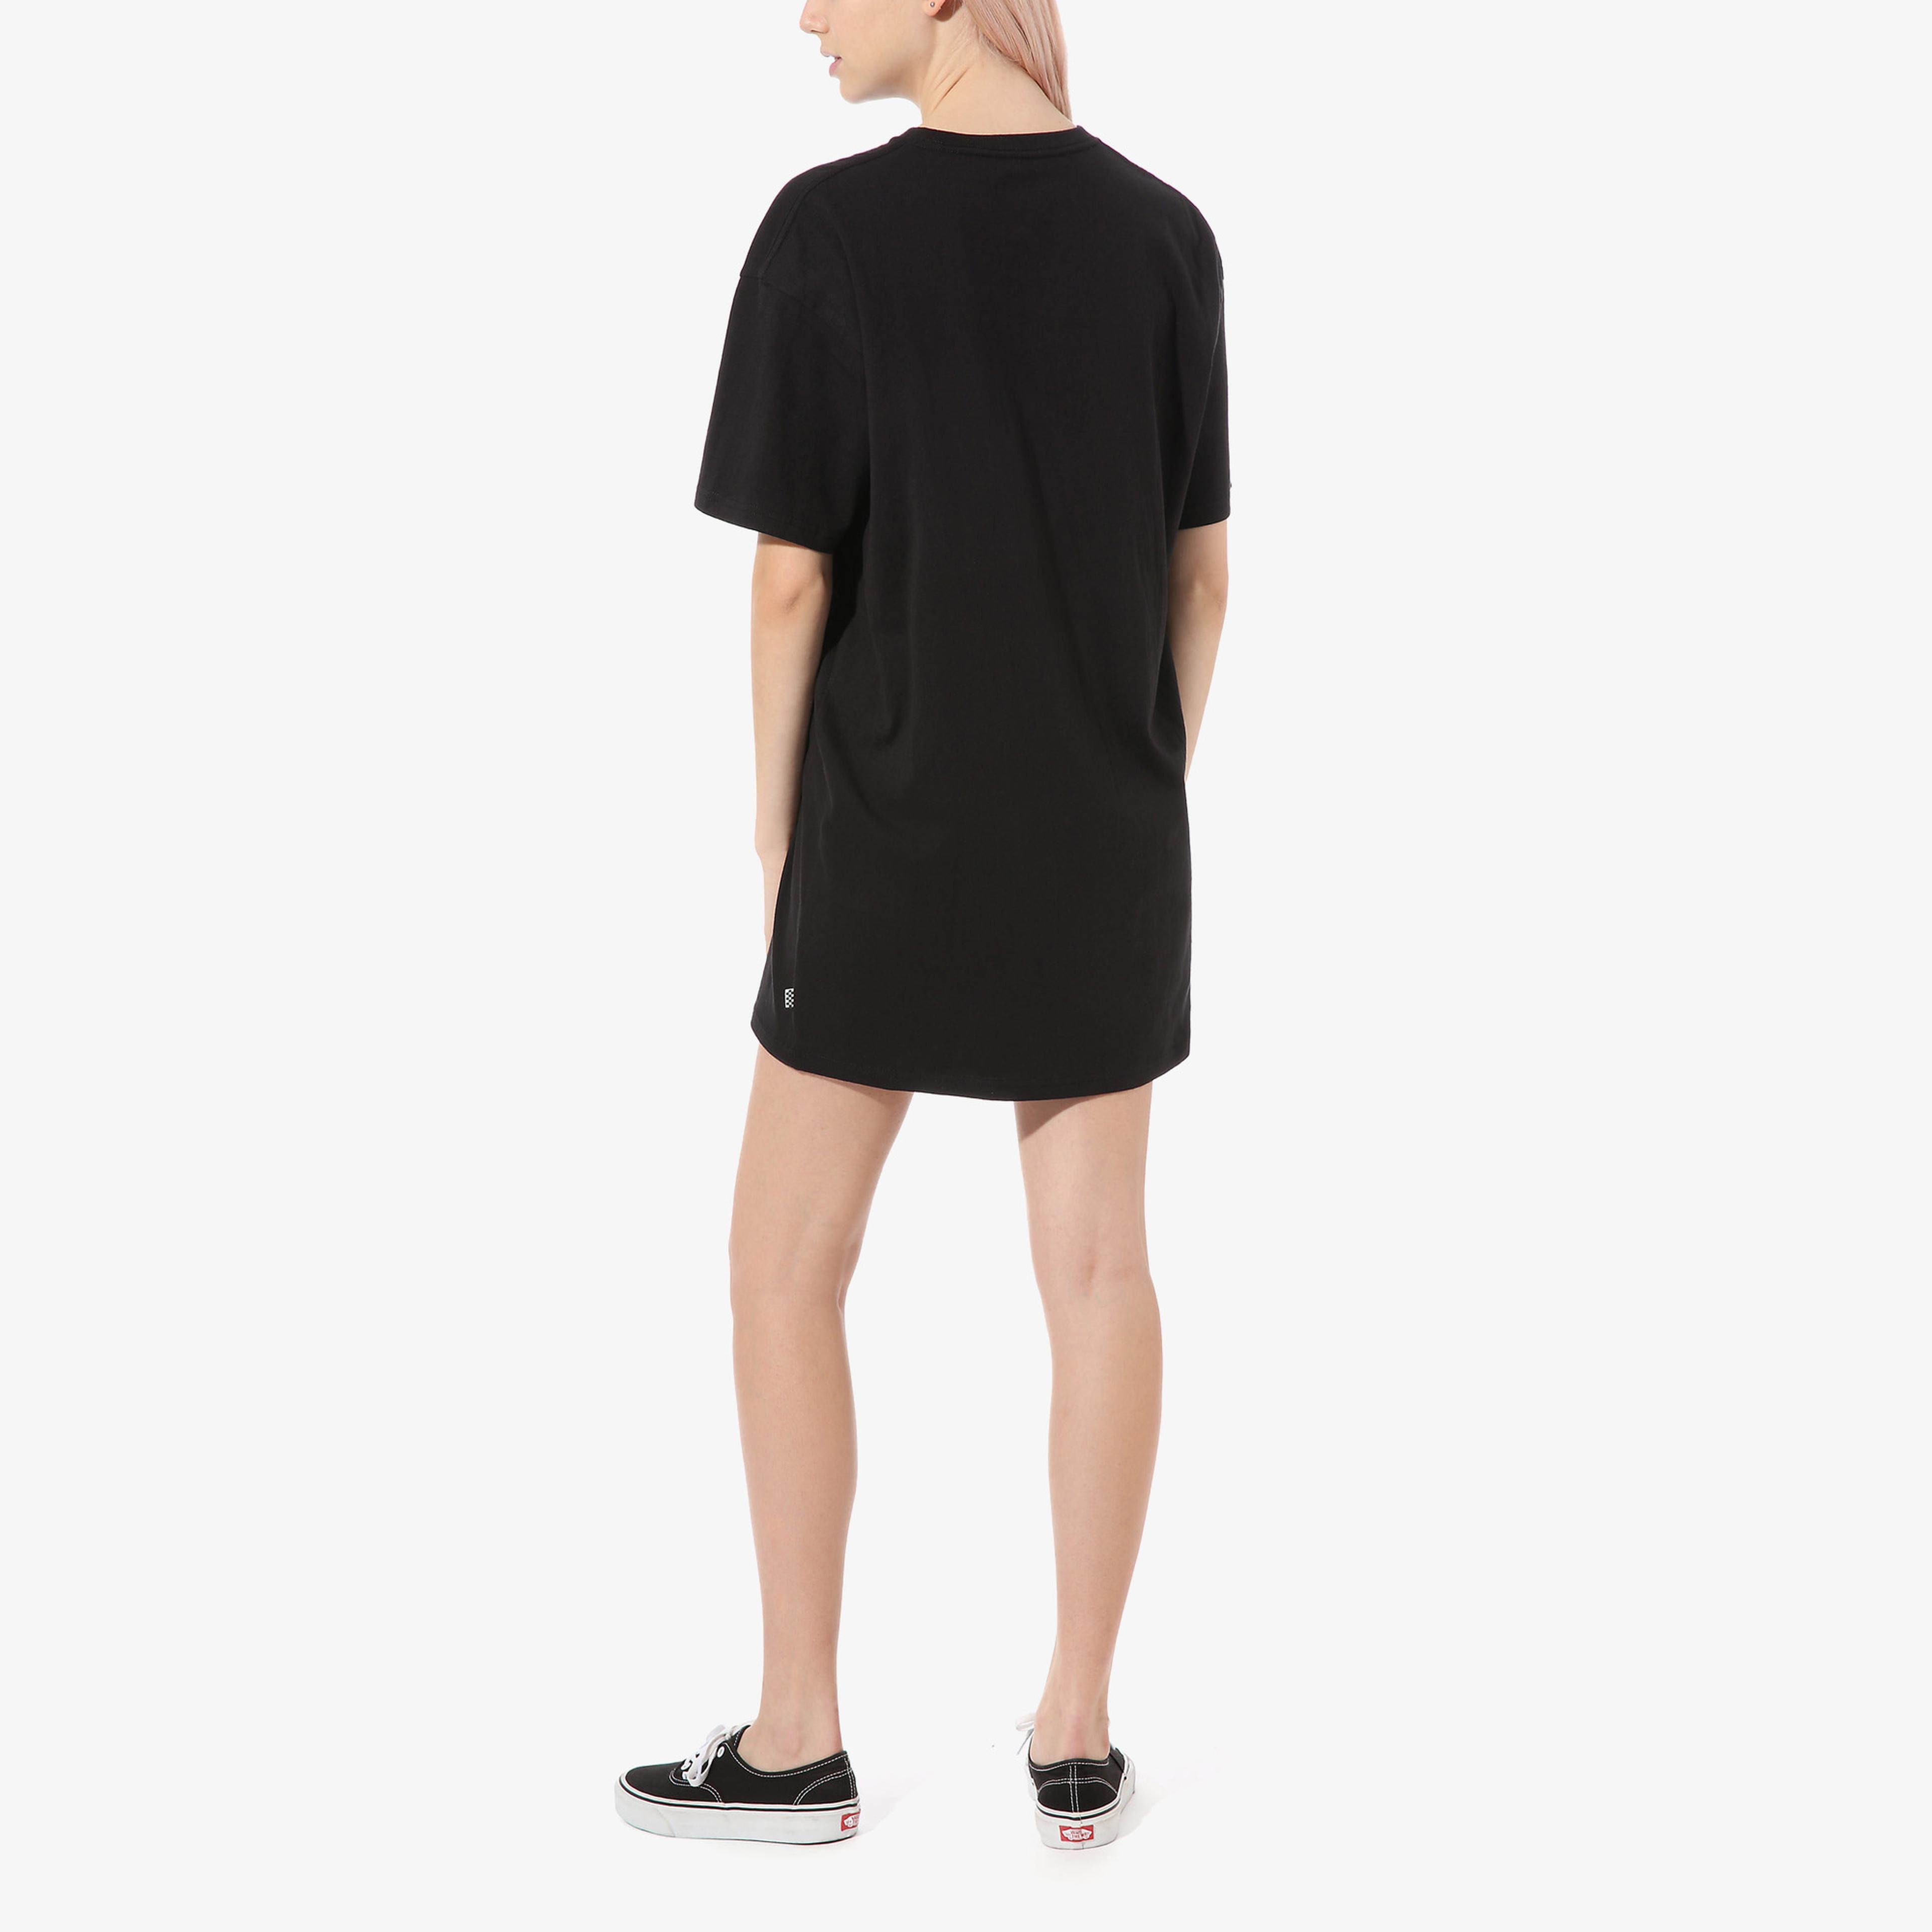 Vans Center Vee Kadın Siyah T-Shirt Elbise